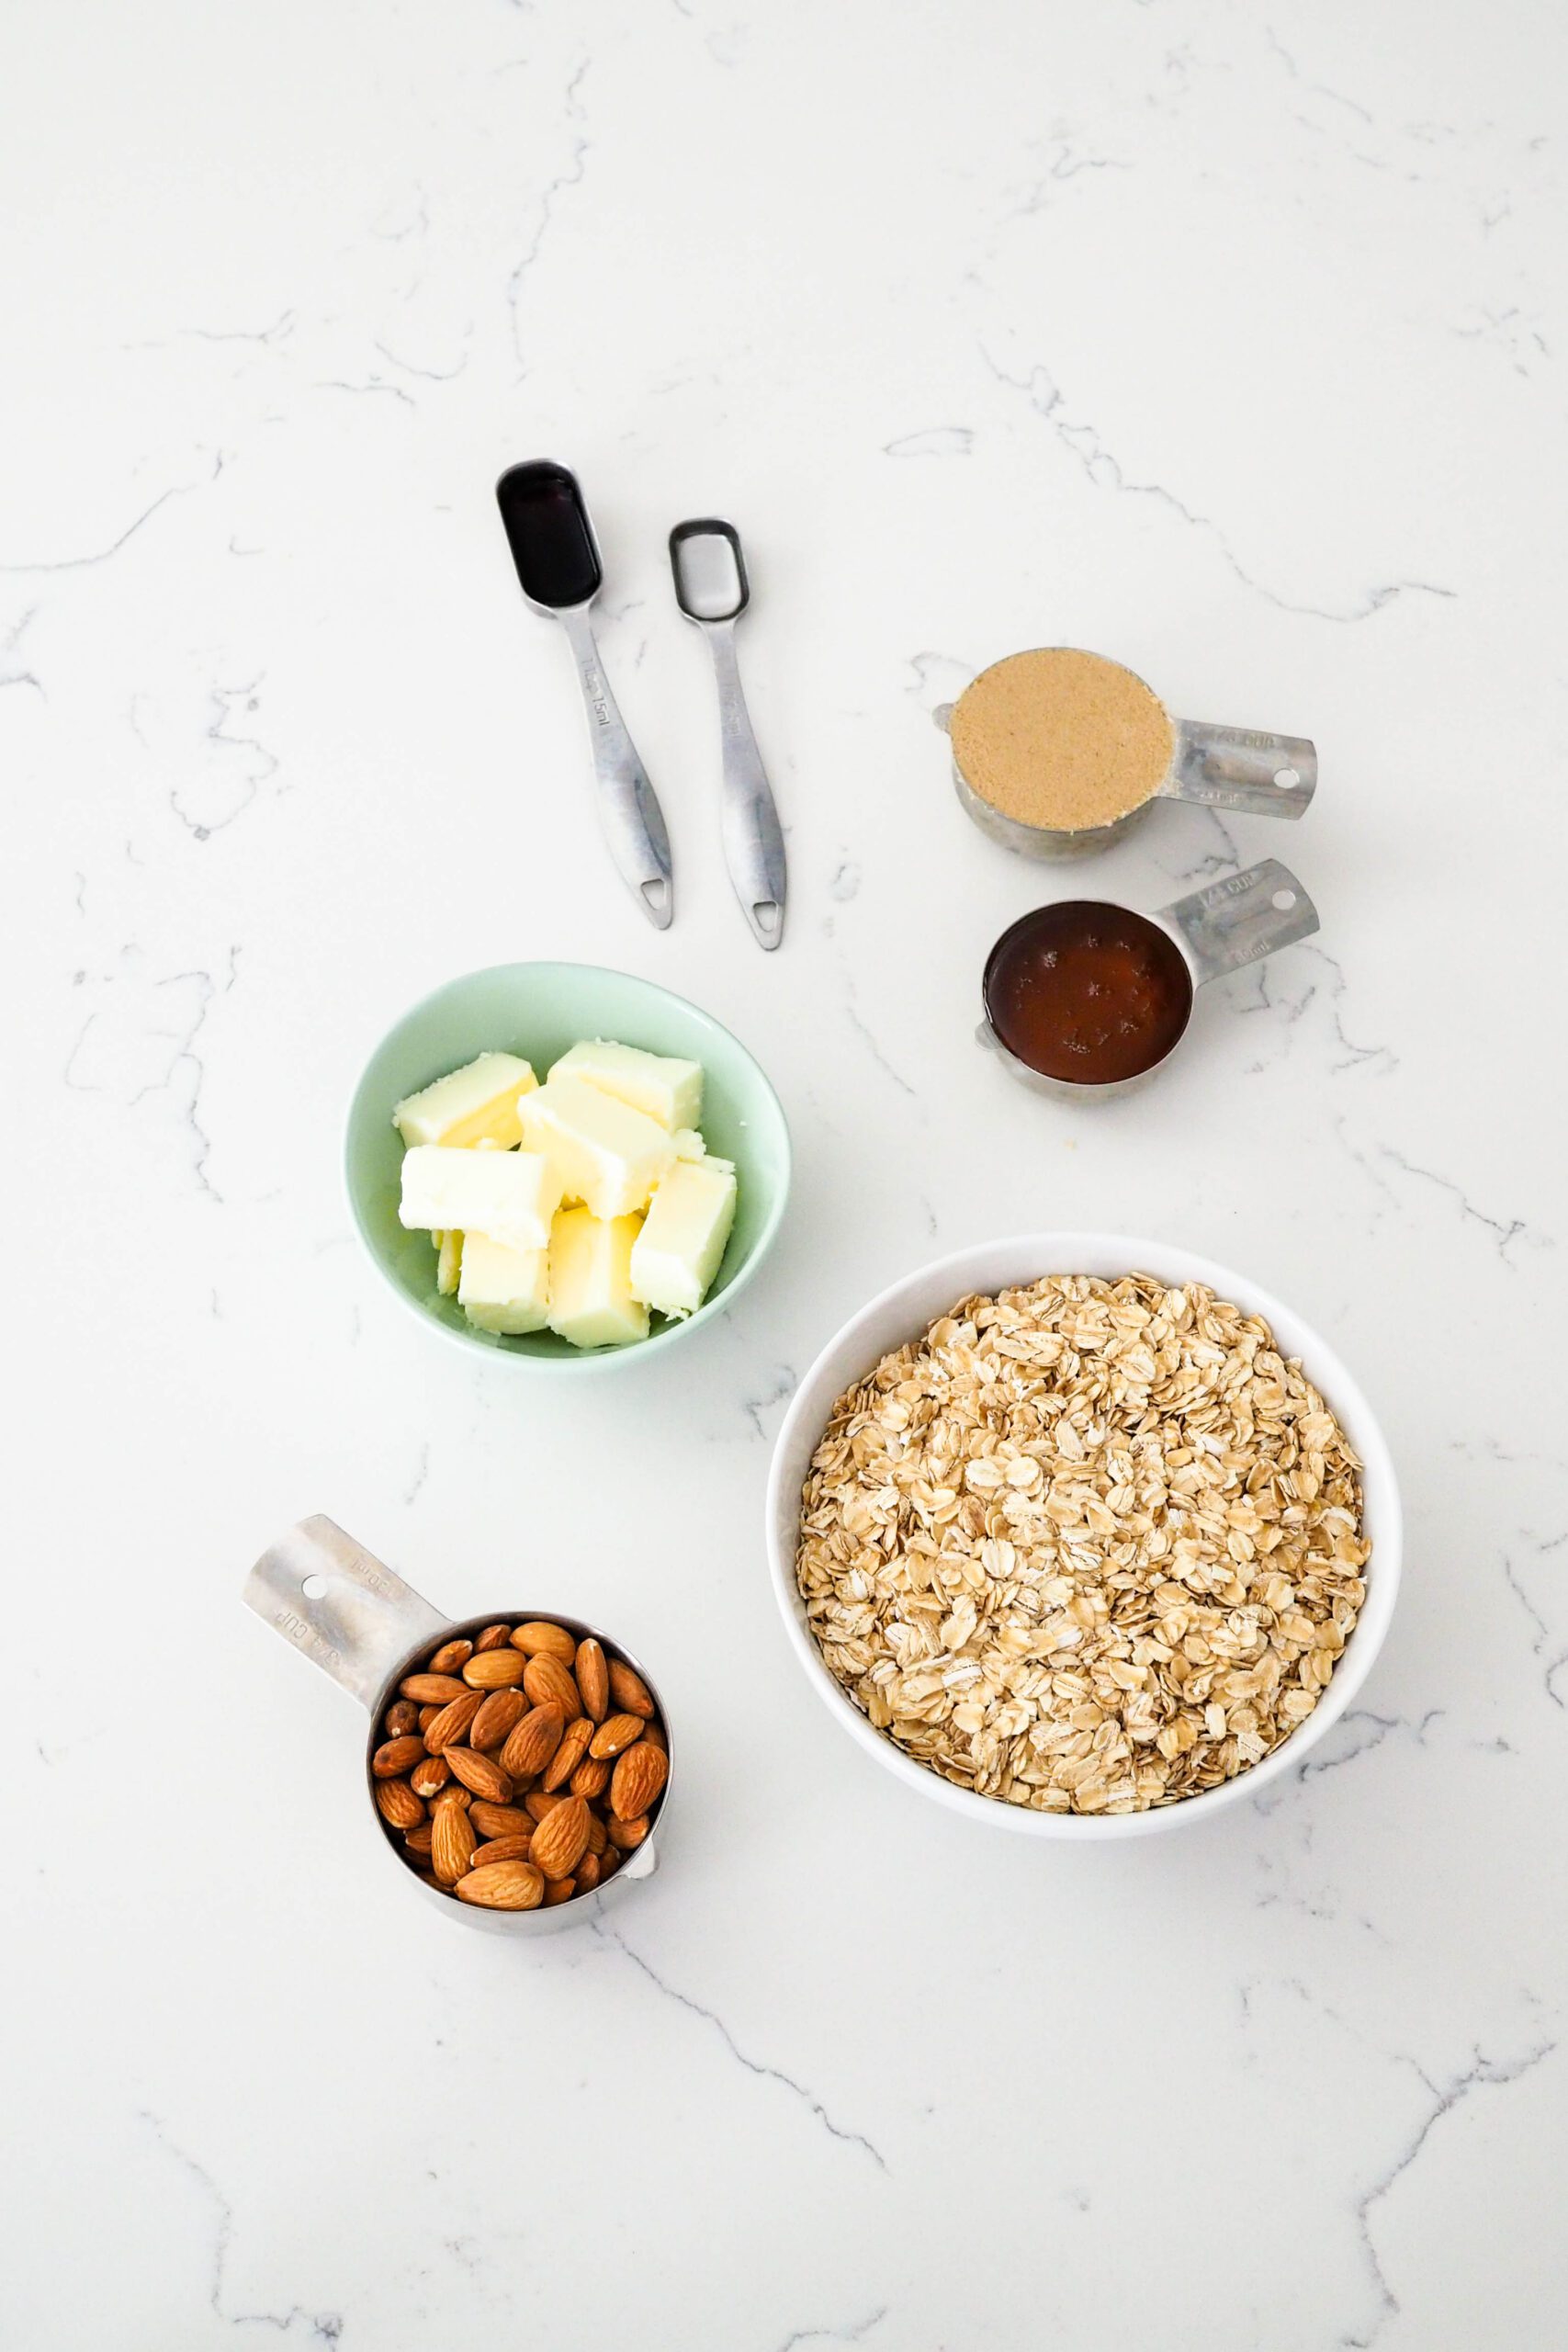 Ingredients for vanilla almond granola on a quartz countertop.